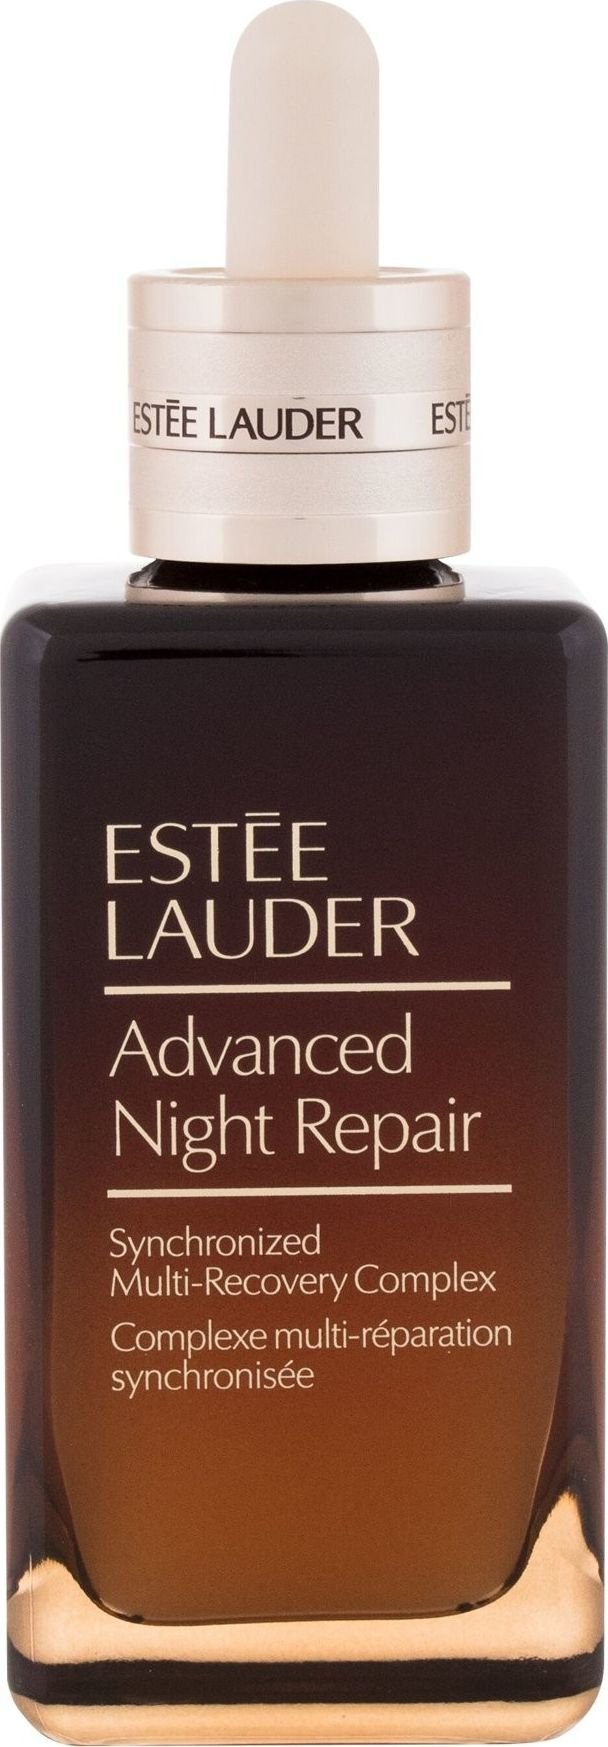 Ser pentru fata Estee Lauder, Advanced Night Repair Synchronized Multi-Recovery Complex, 100 ml